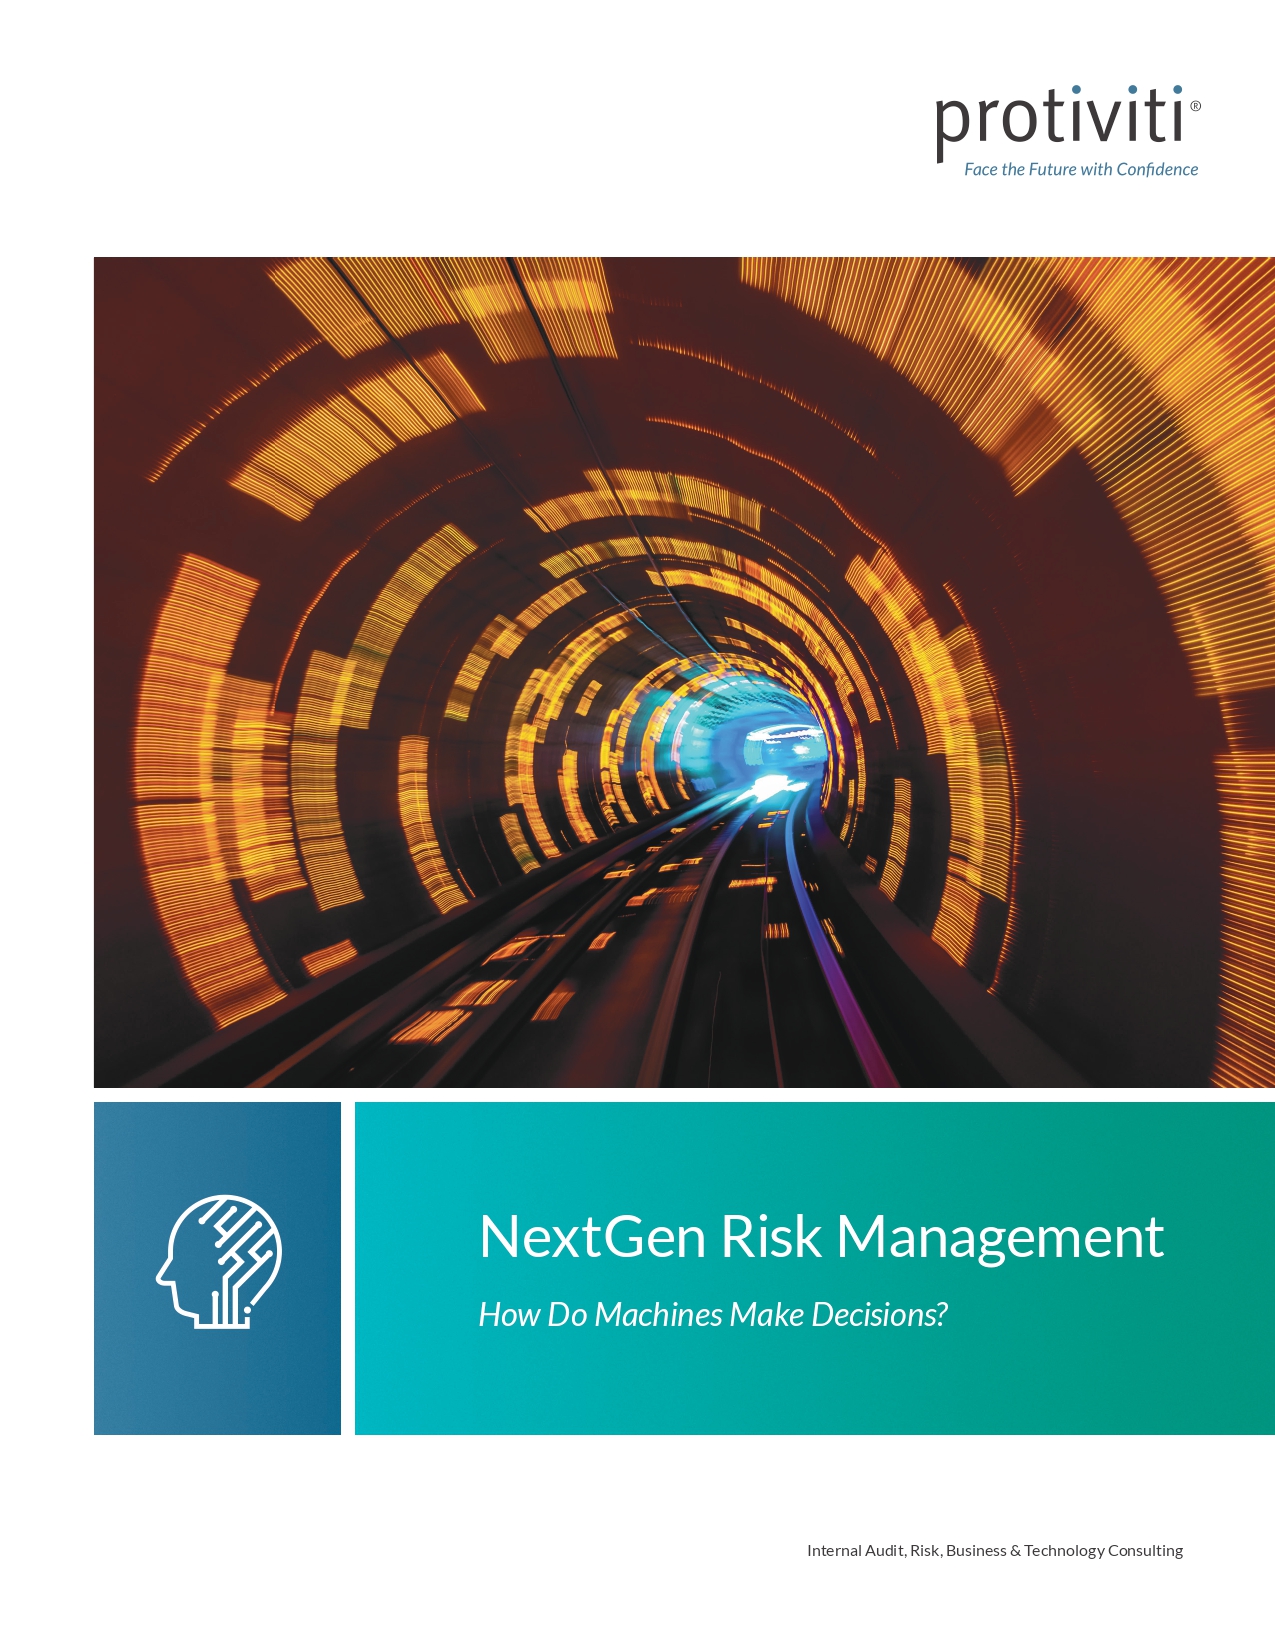 Next-Gen Risk Management